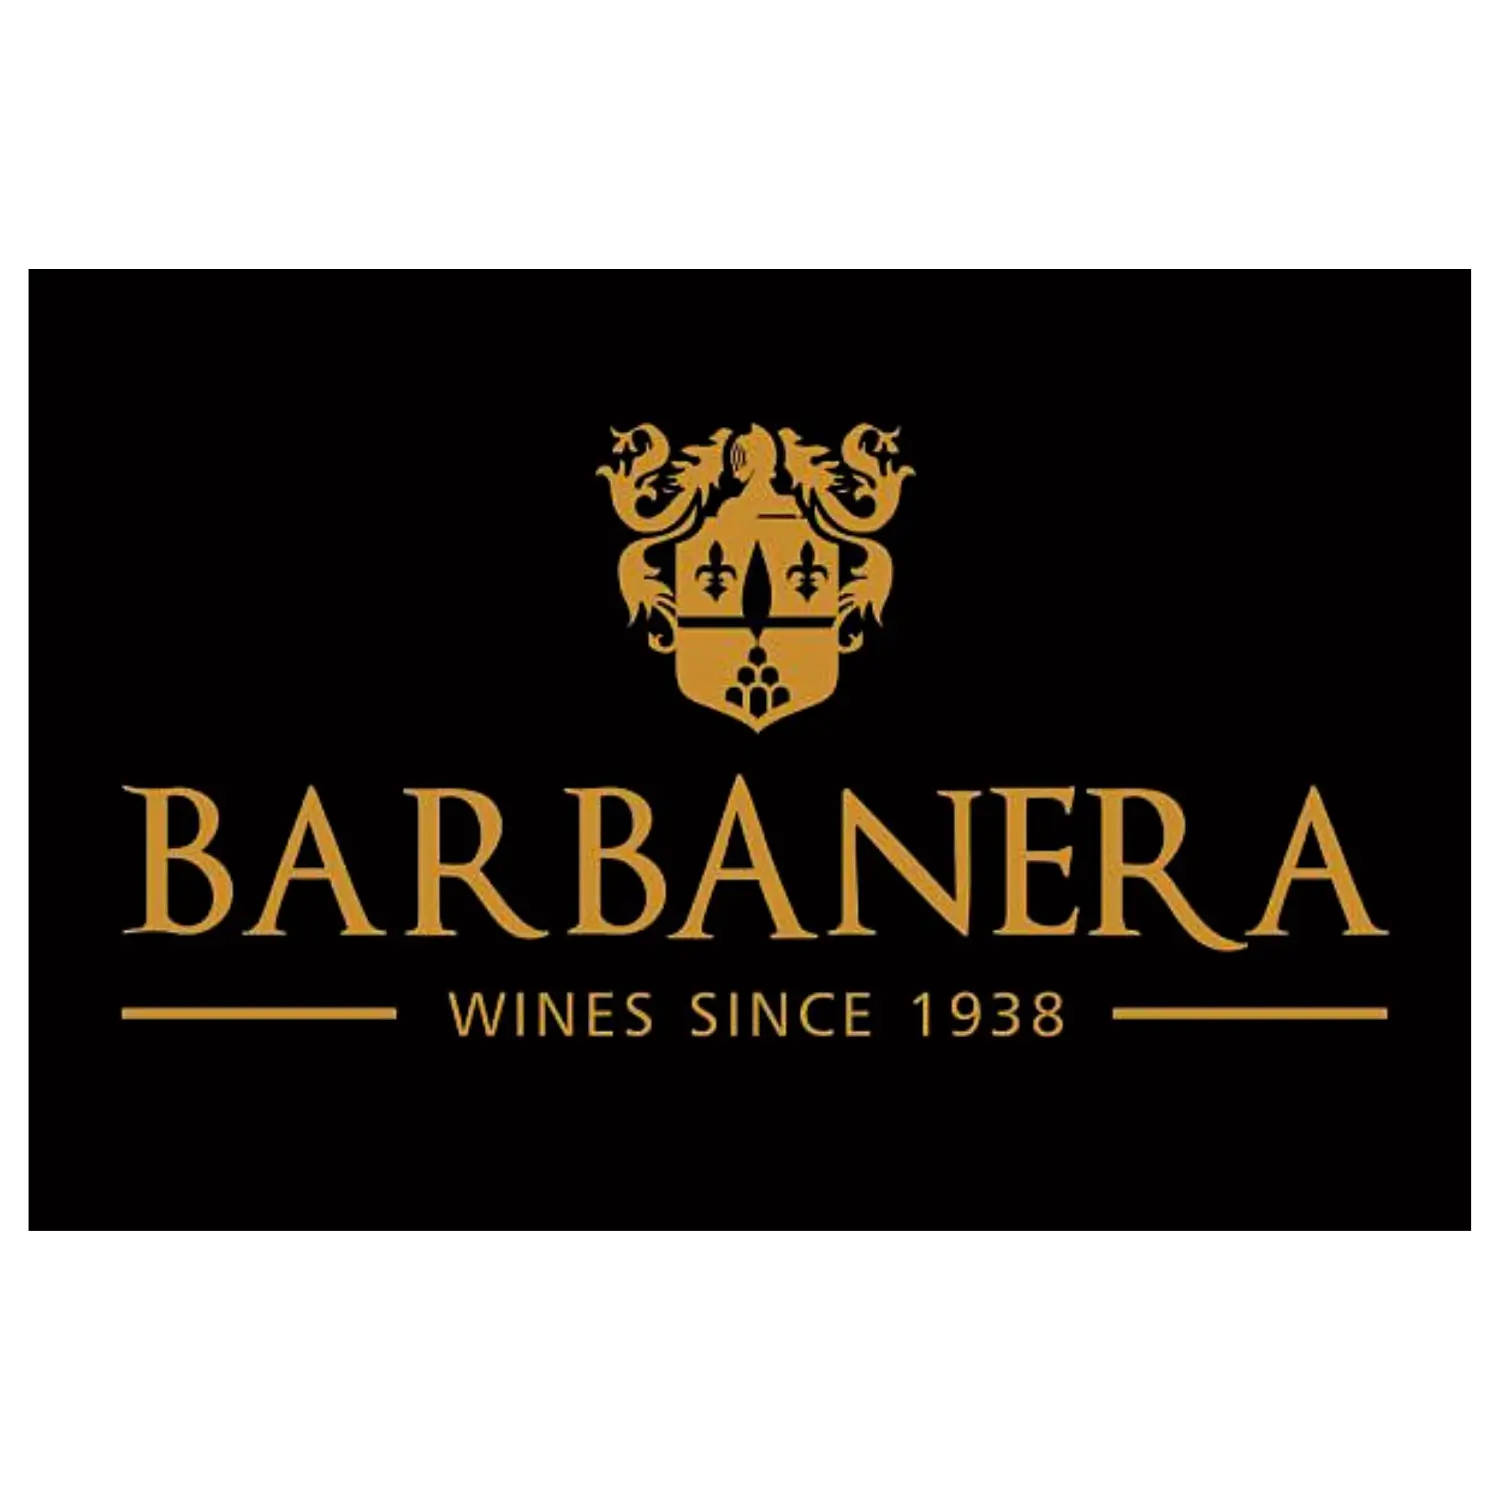 logo-ul cramei de vinuri Barbanera, text auriu si fundal negru